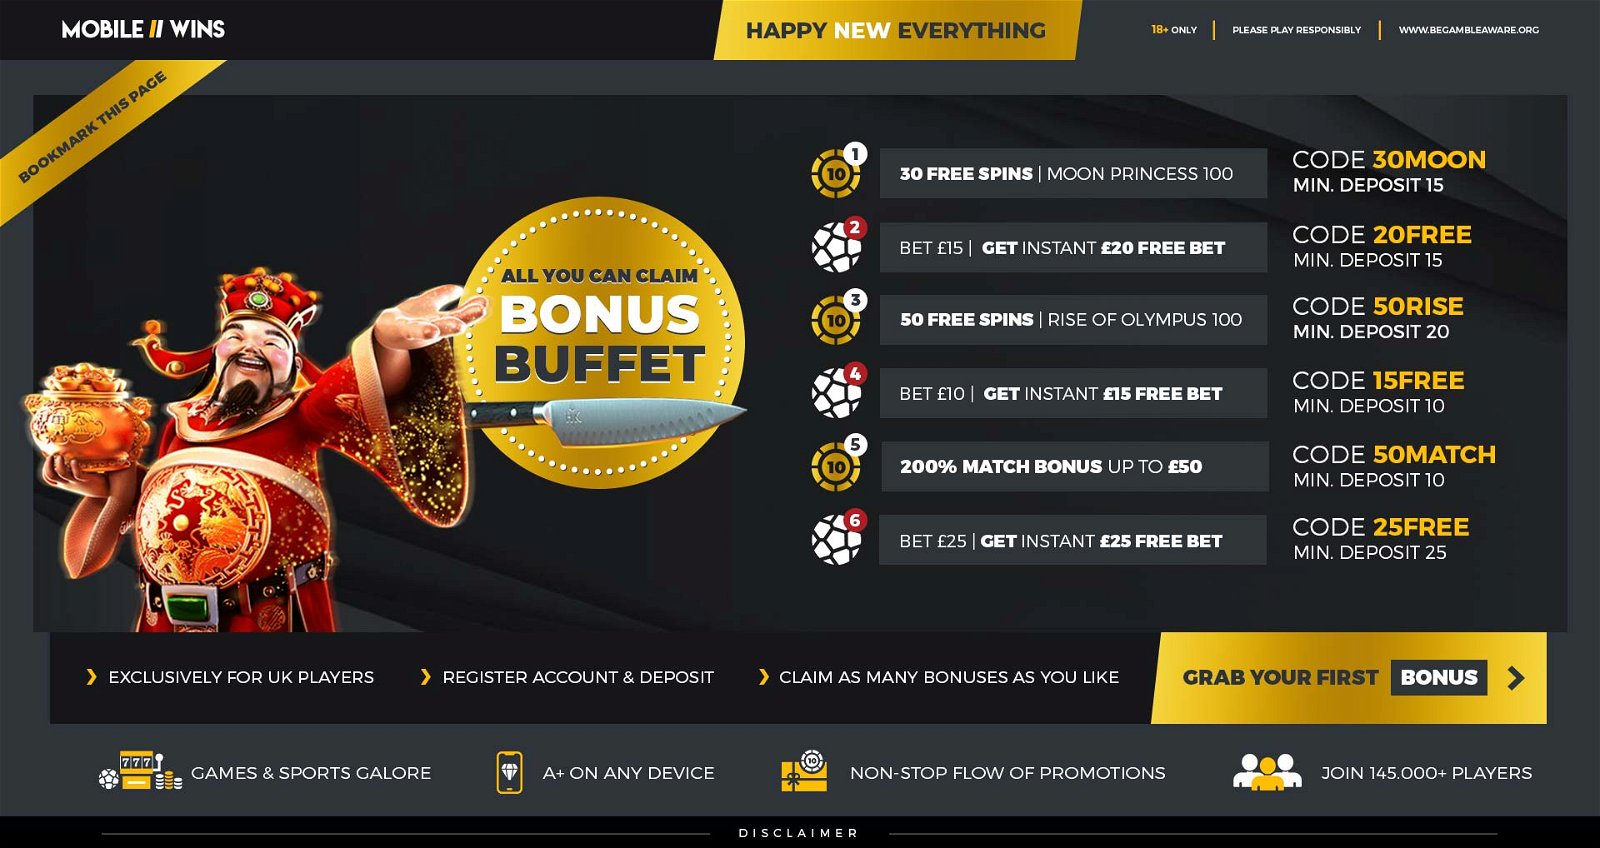 Casino & Sports | NP | Bonus Buffet